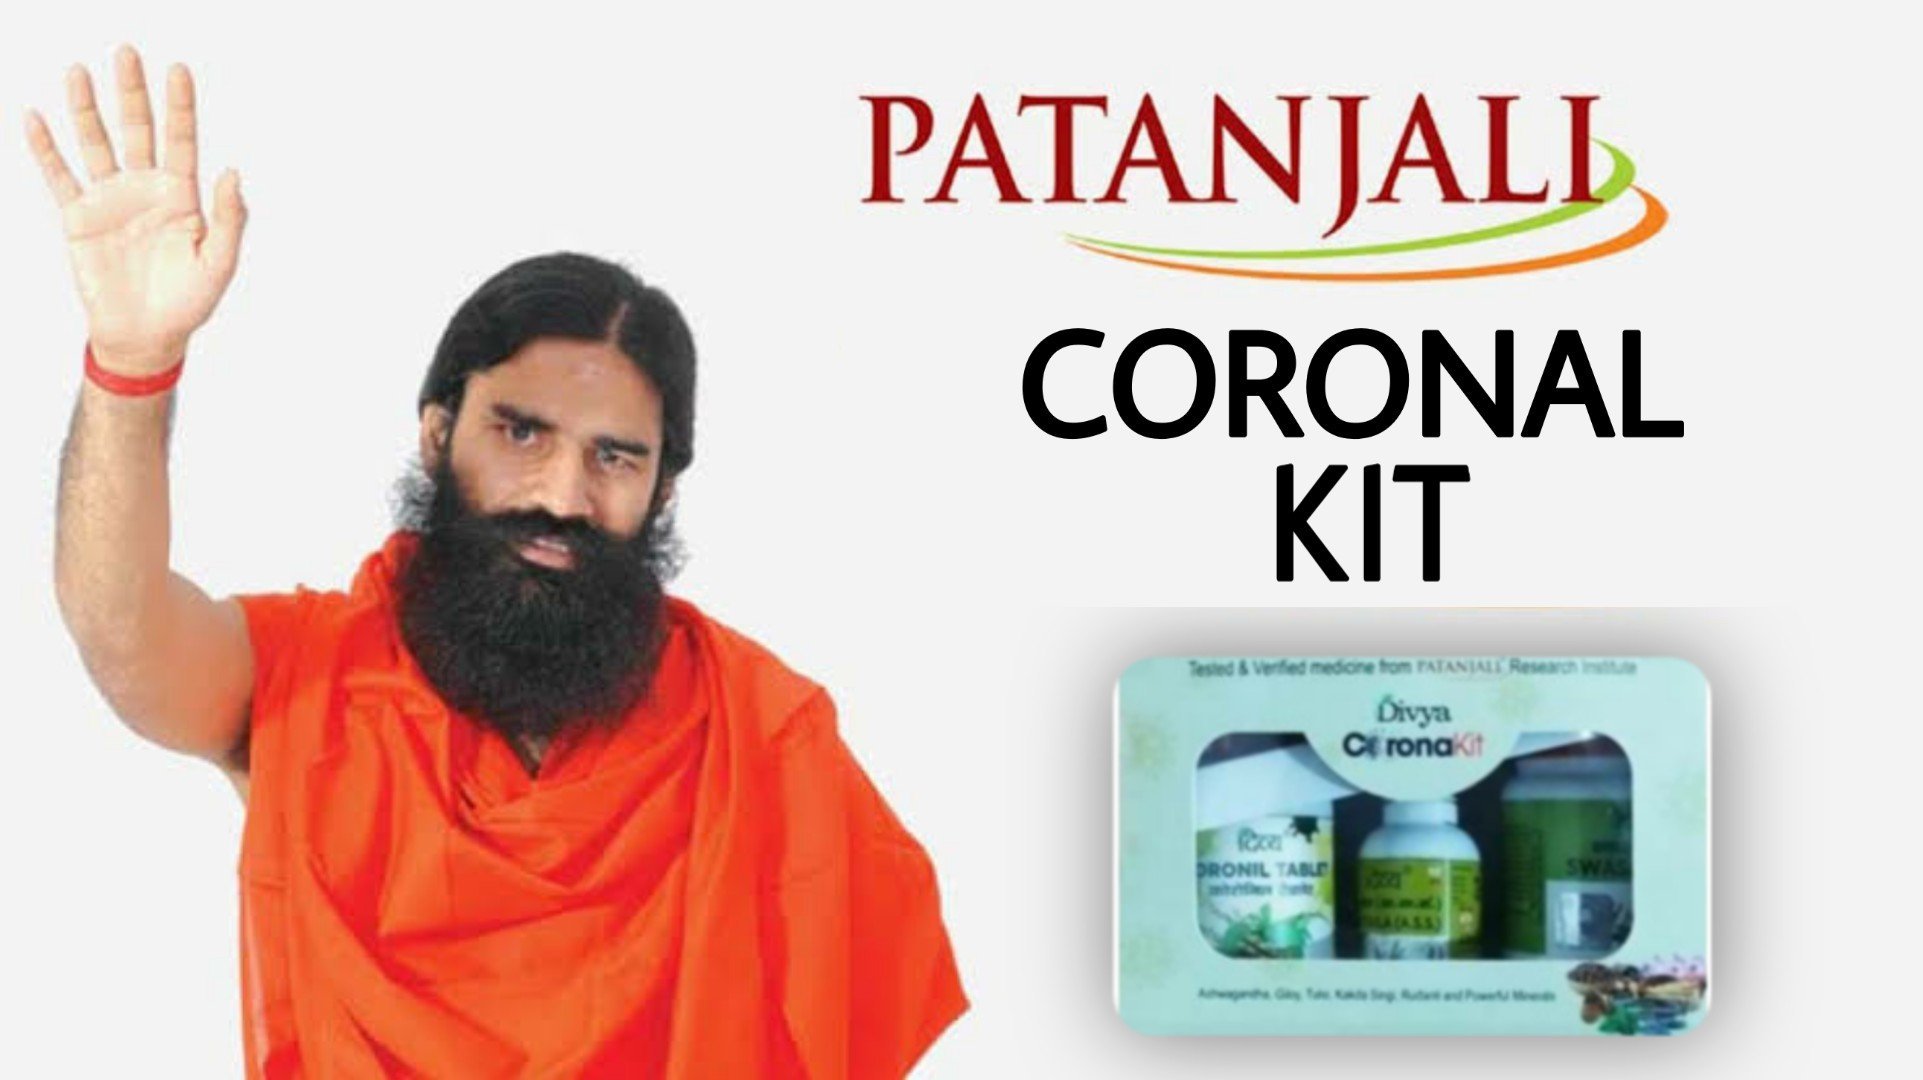 Patanjali Coronil kit launches to cure Coronavirus within 7 days